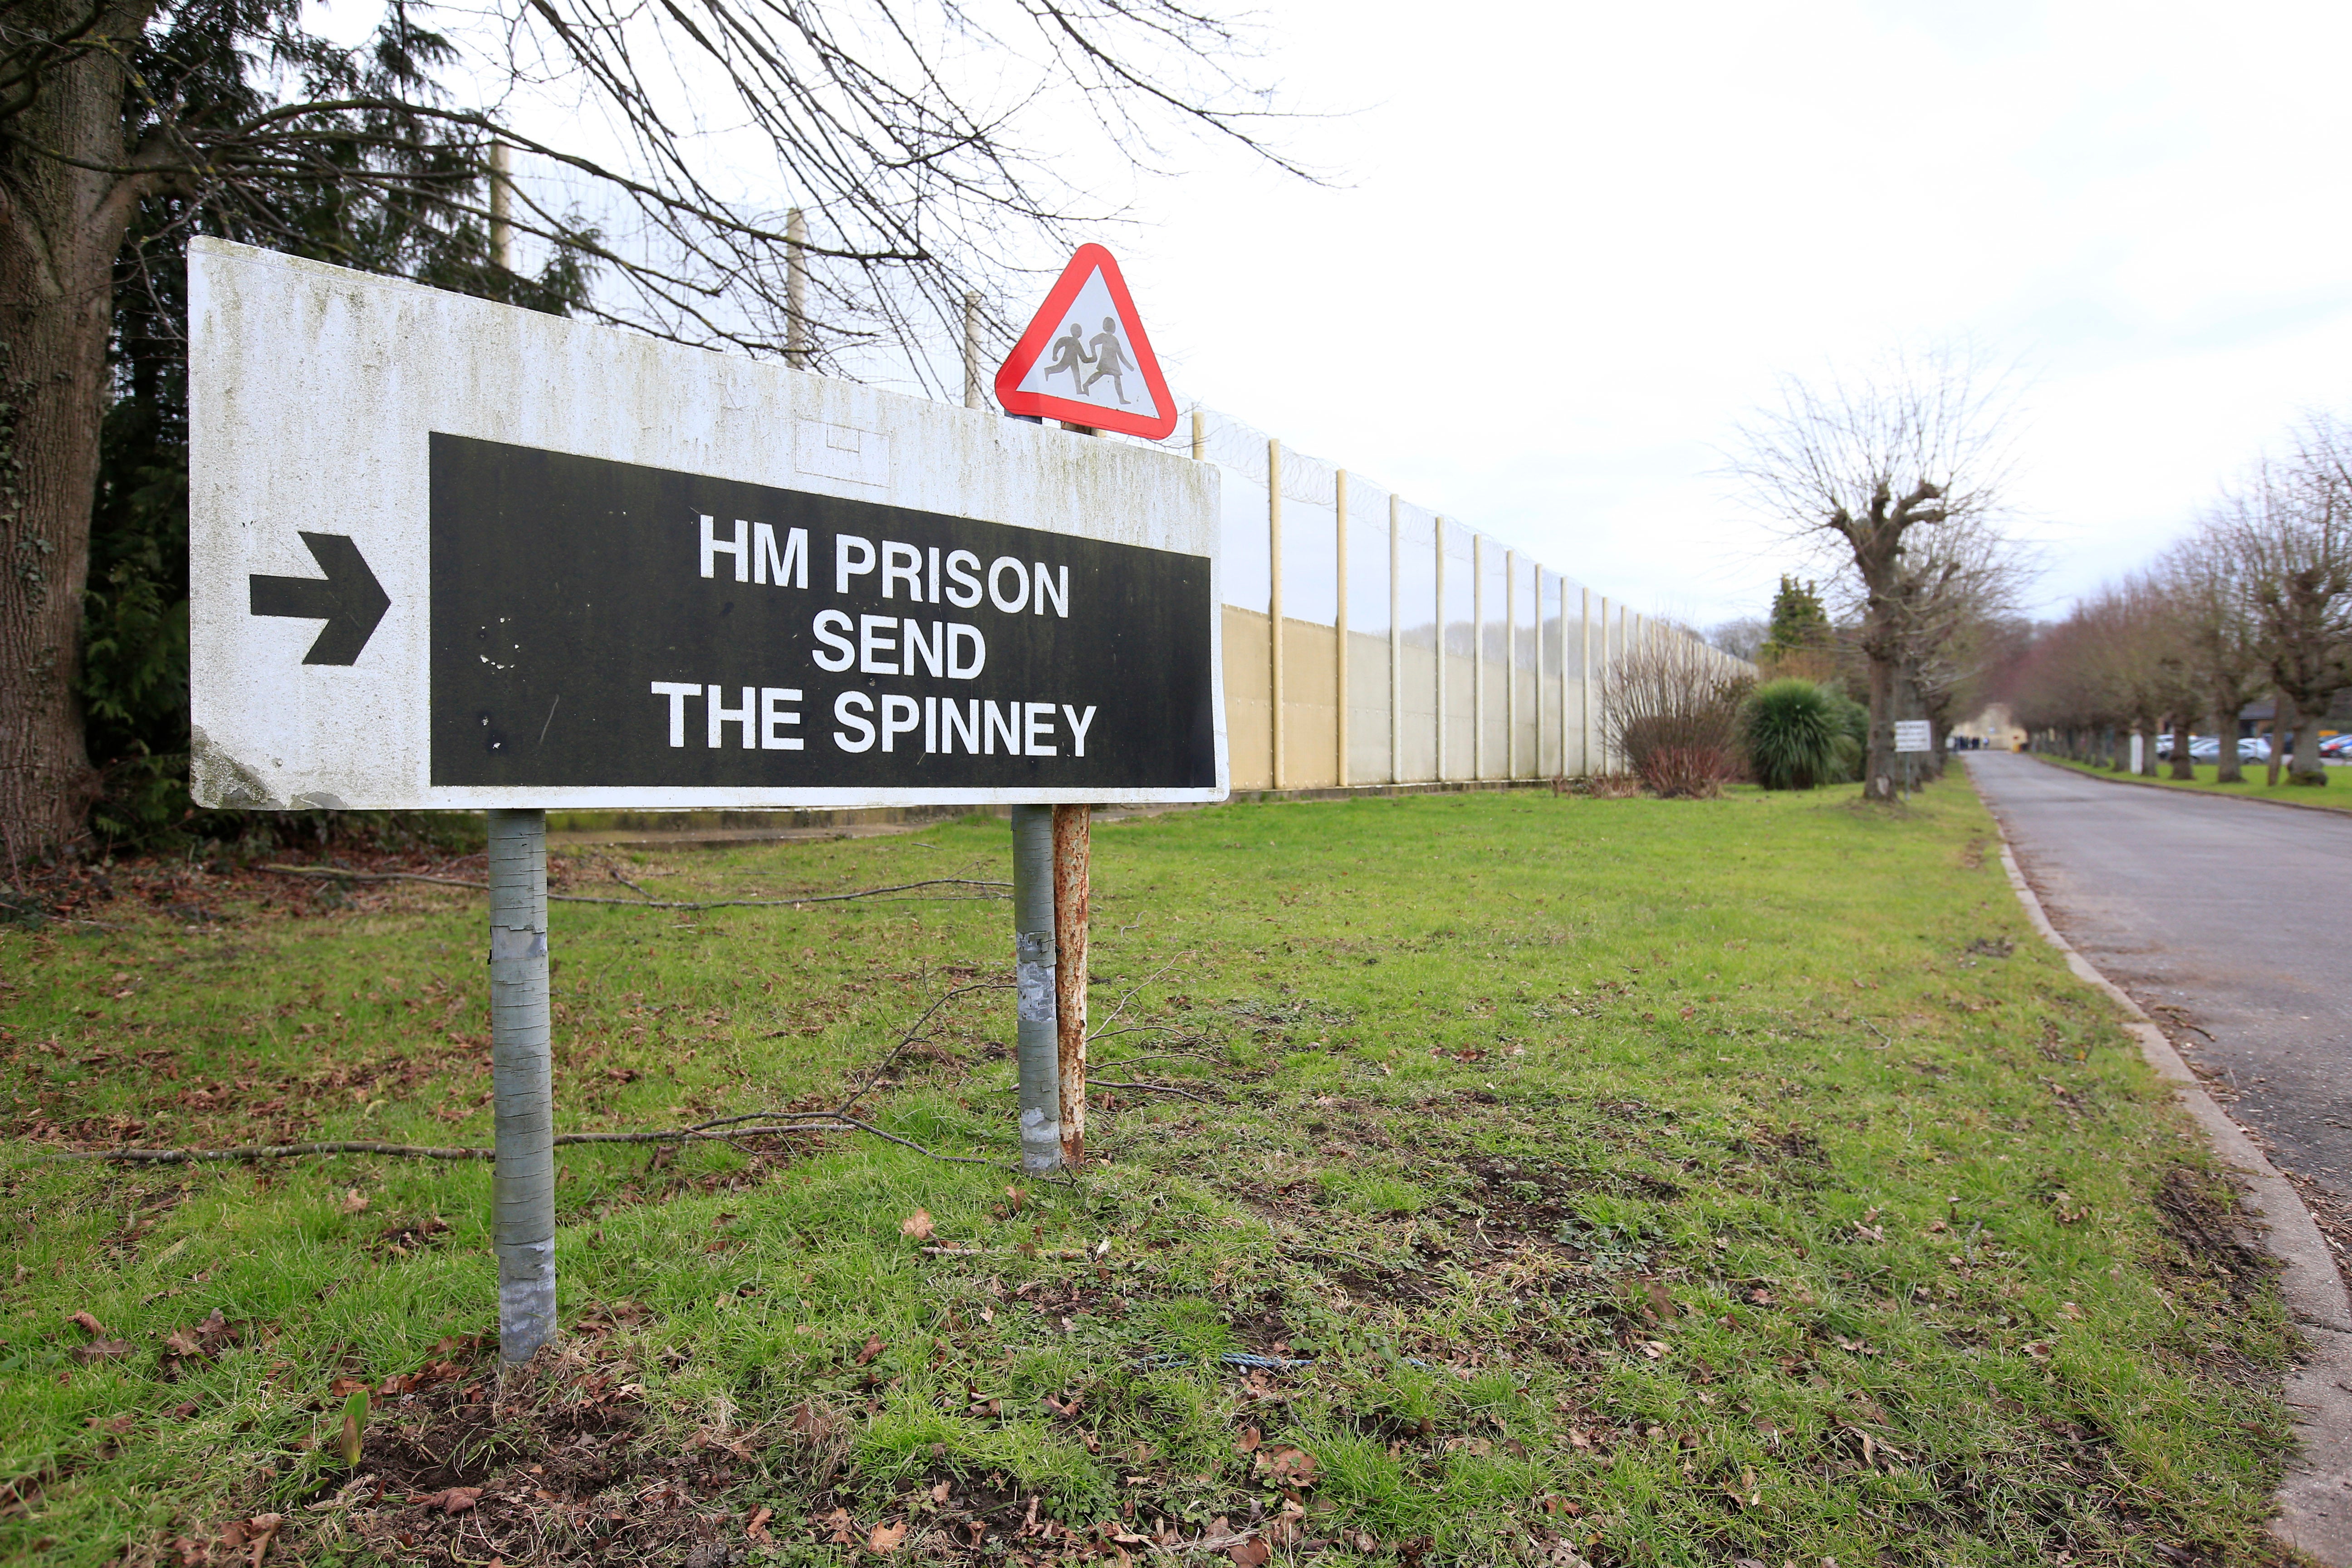 HMP Send, a female training prison in Send, Surrey